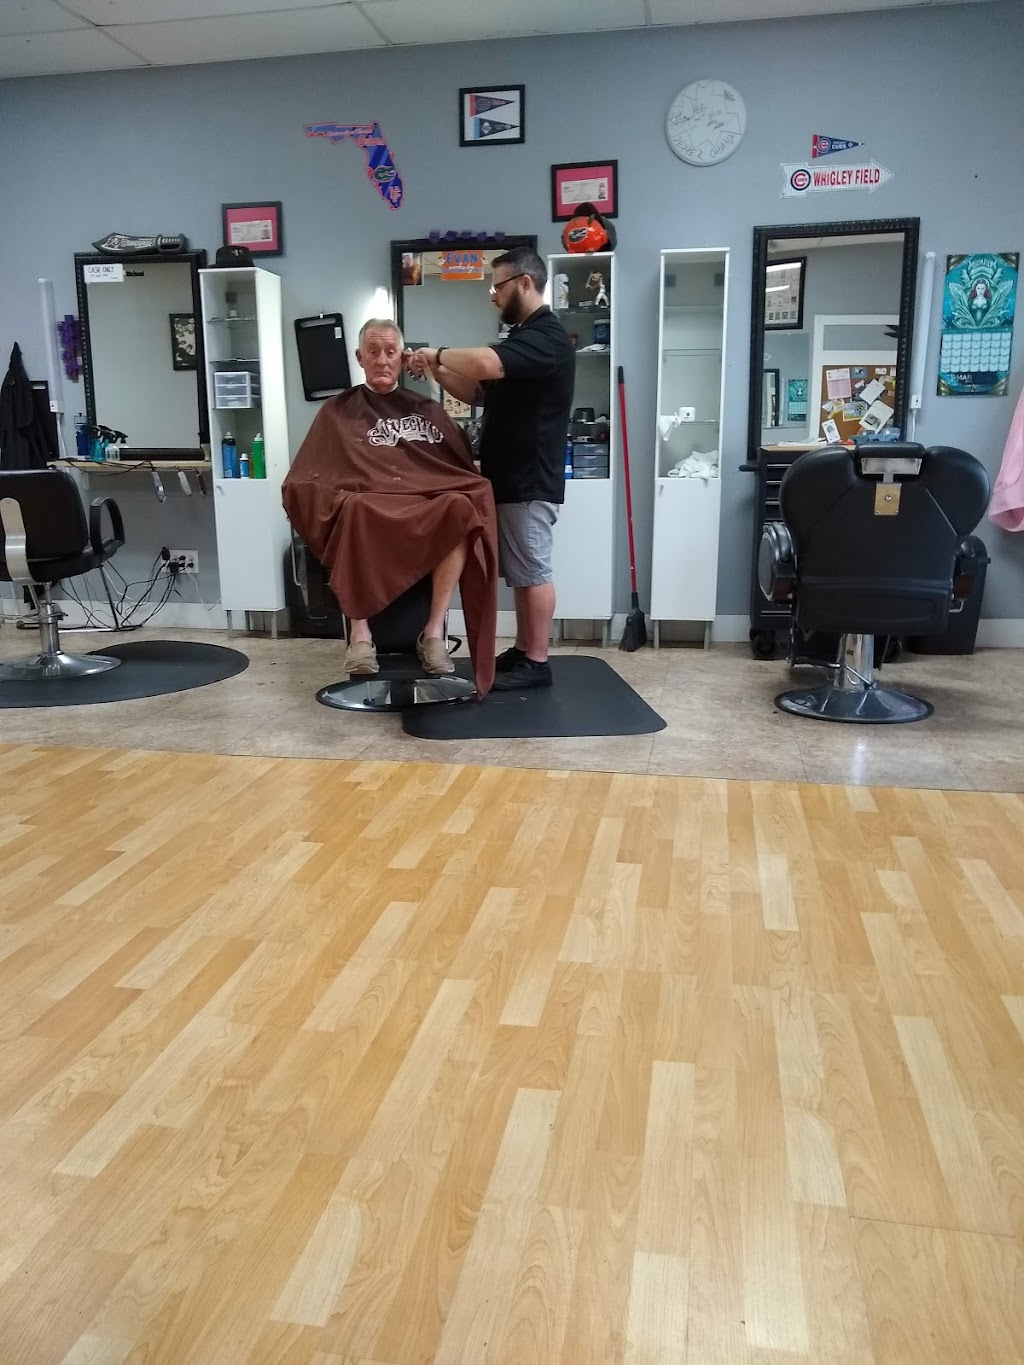 County Line Barber Shop | 12406 County Line Rd, Hudson, FL 34667, USA | Phone: (727) 755-4488